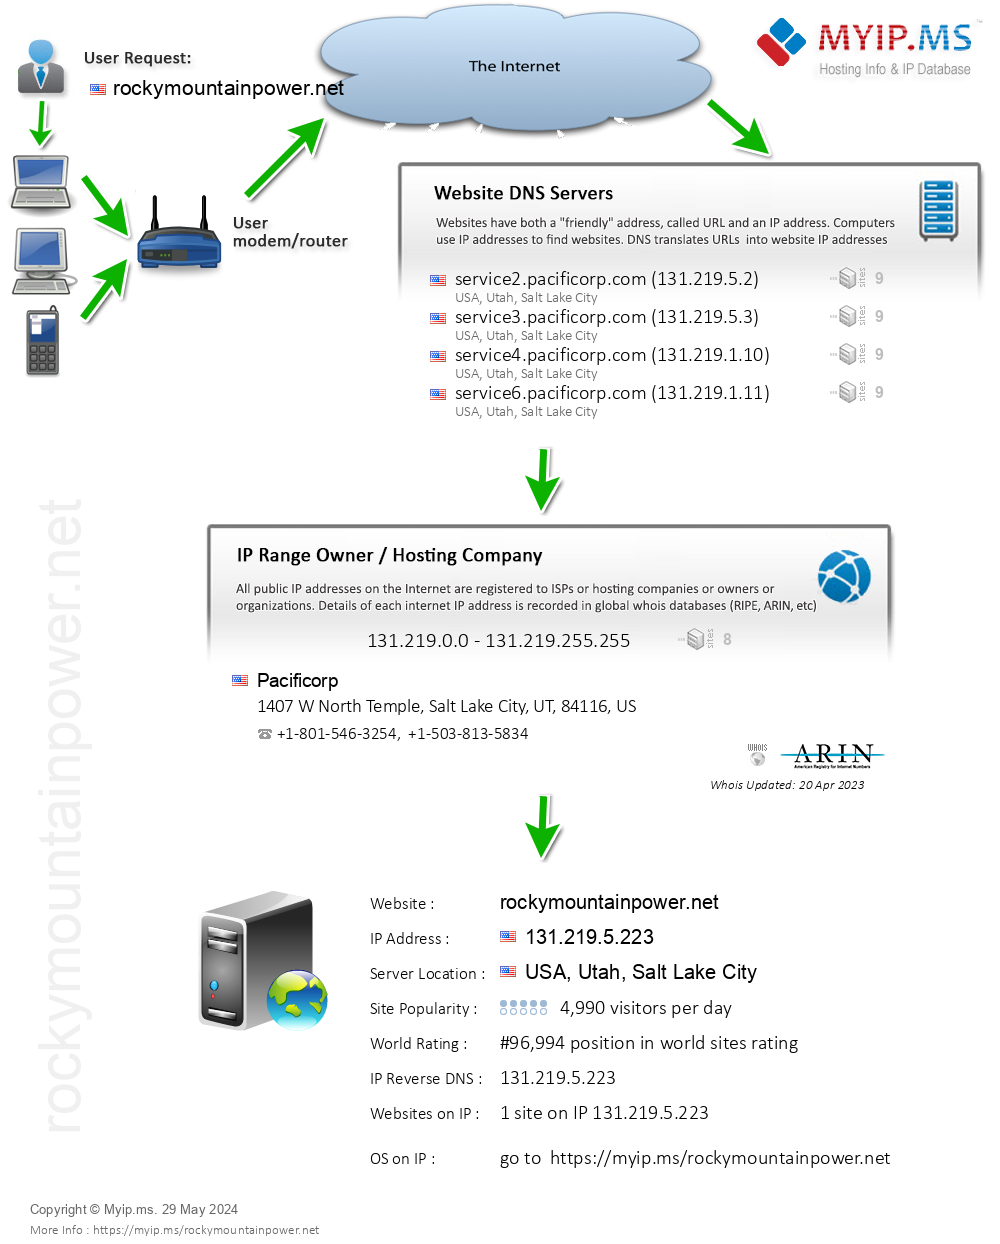 Rockymountainpower.net - Website Hosting Visual IP Diagram